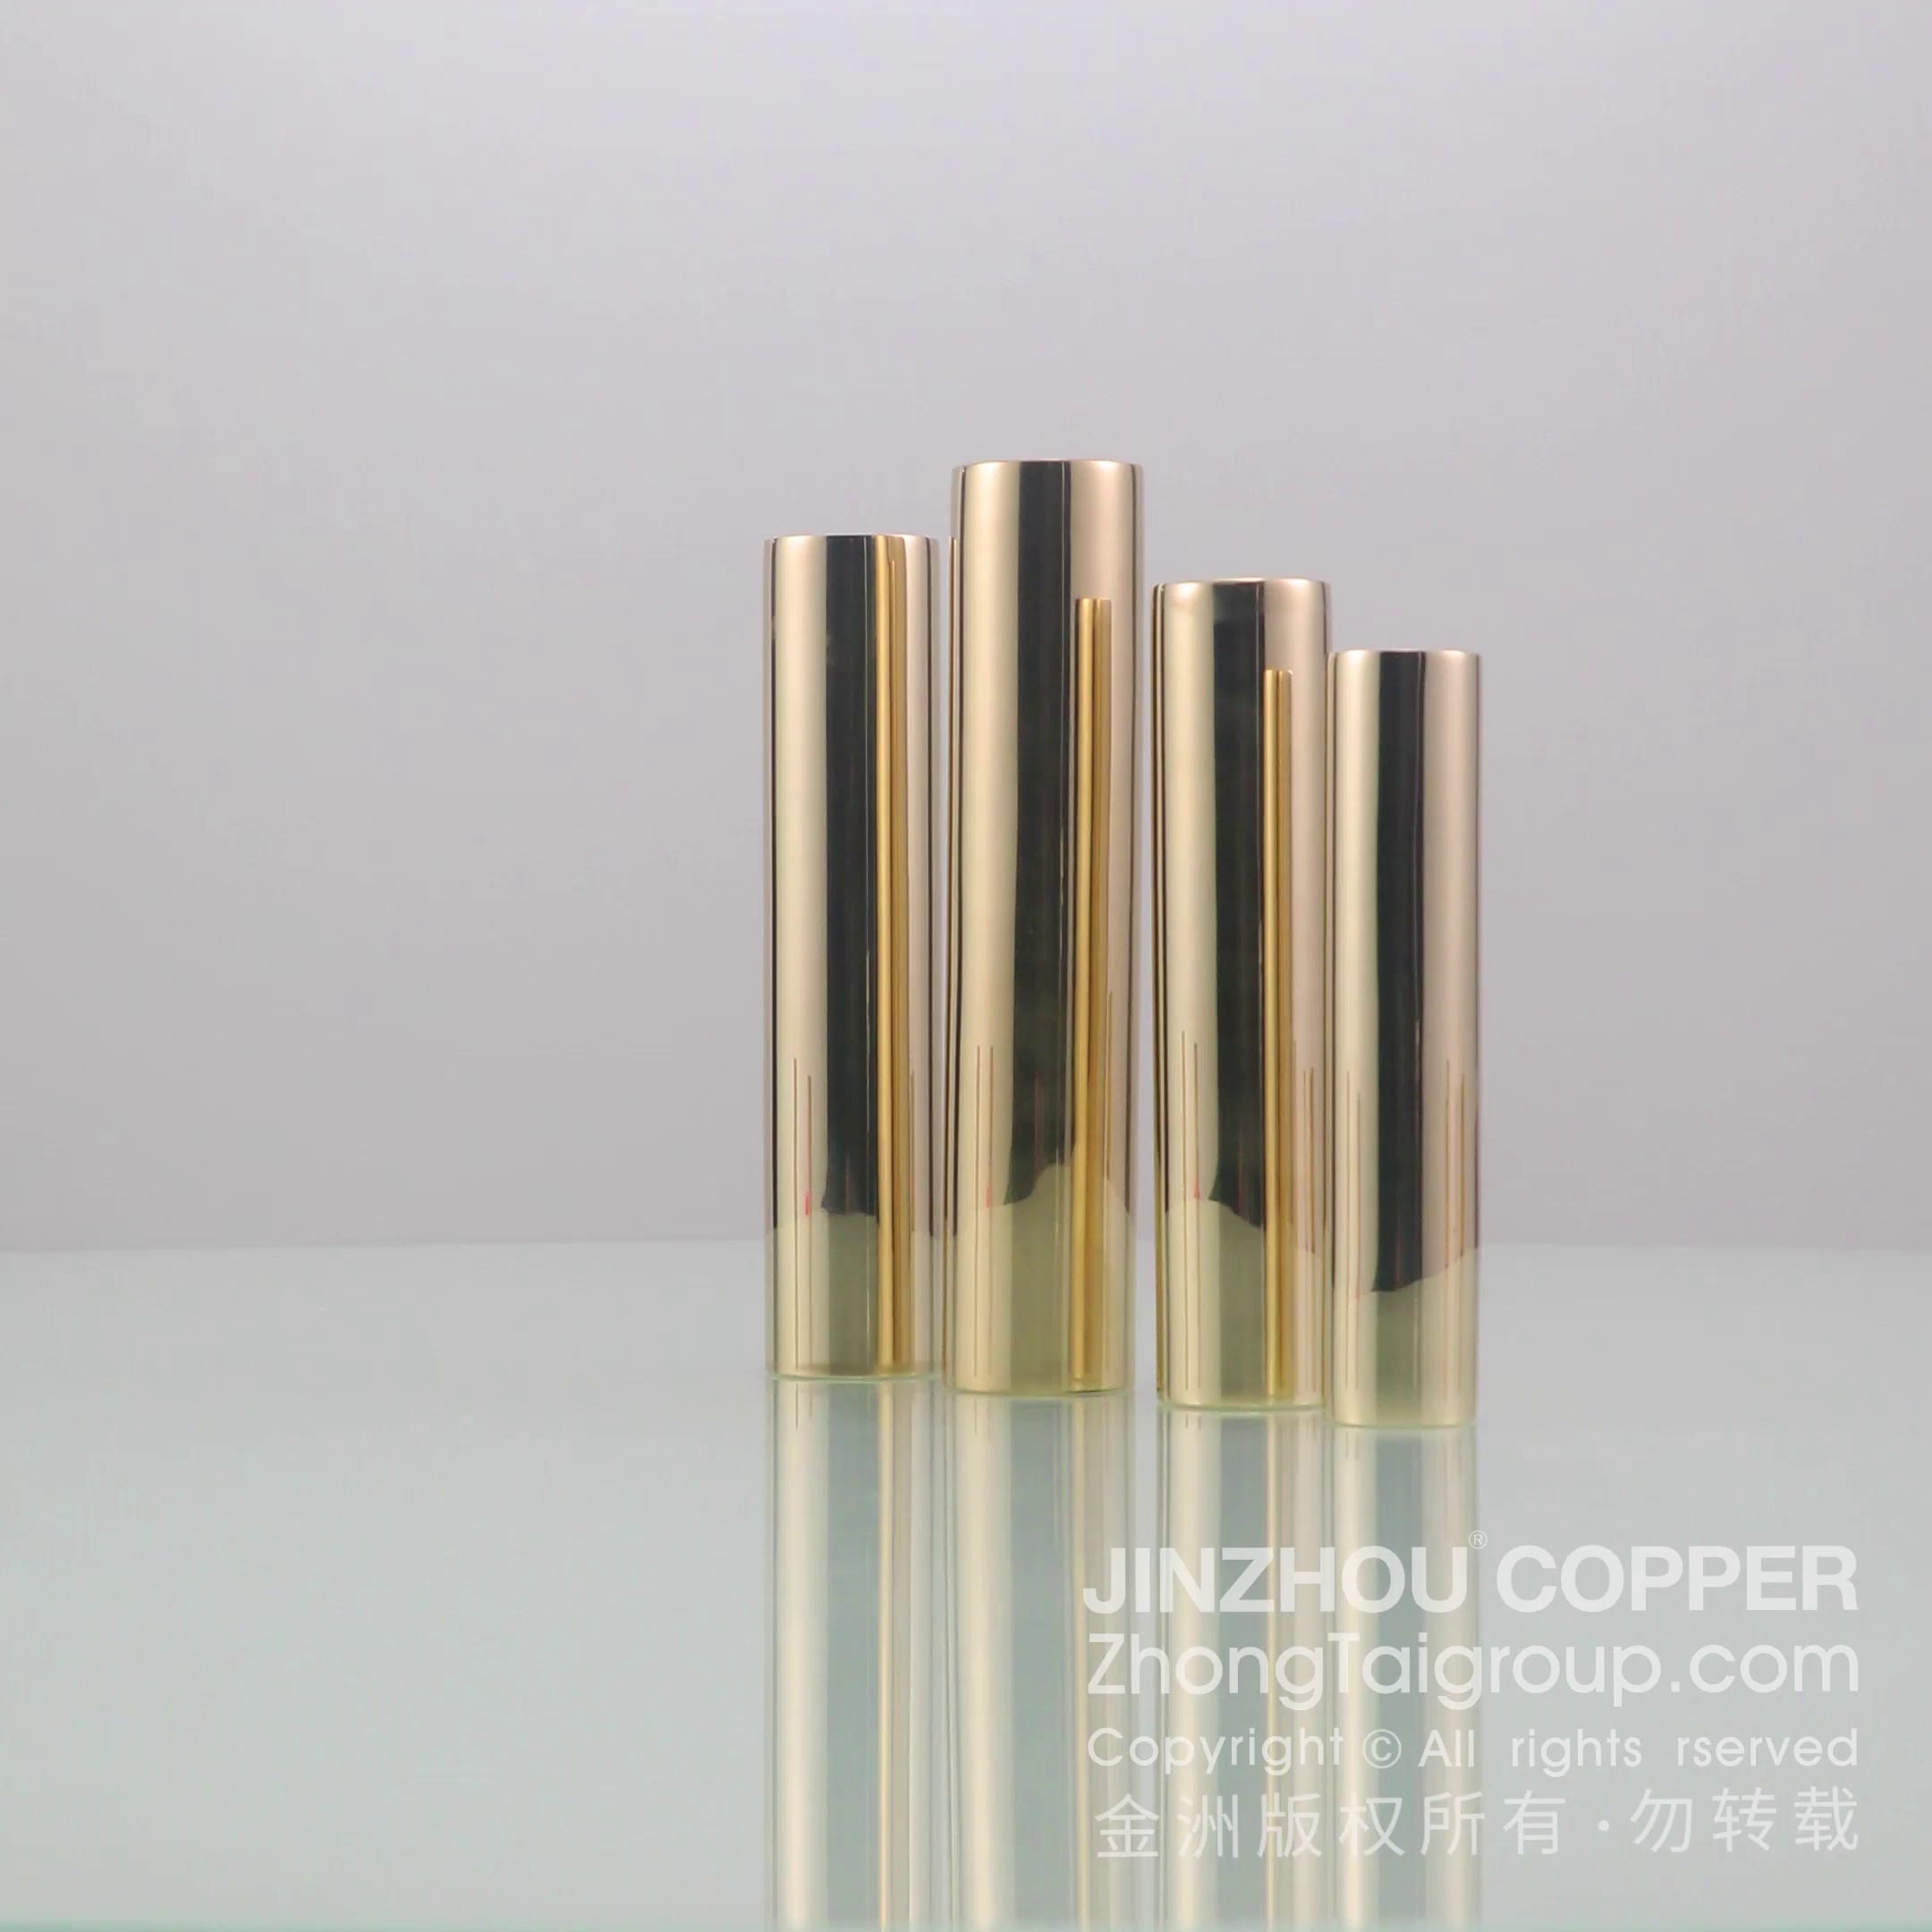 Polishing copper rod, polishing copper rod company, polishing copper rod exporter, polishing copper rod wholesaler